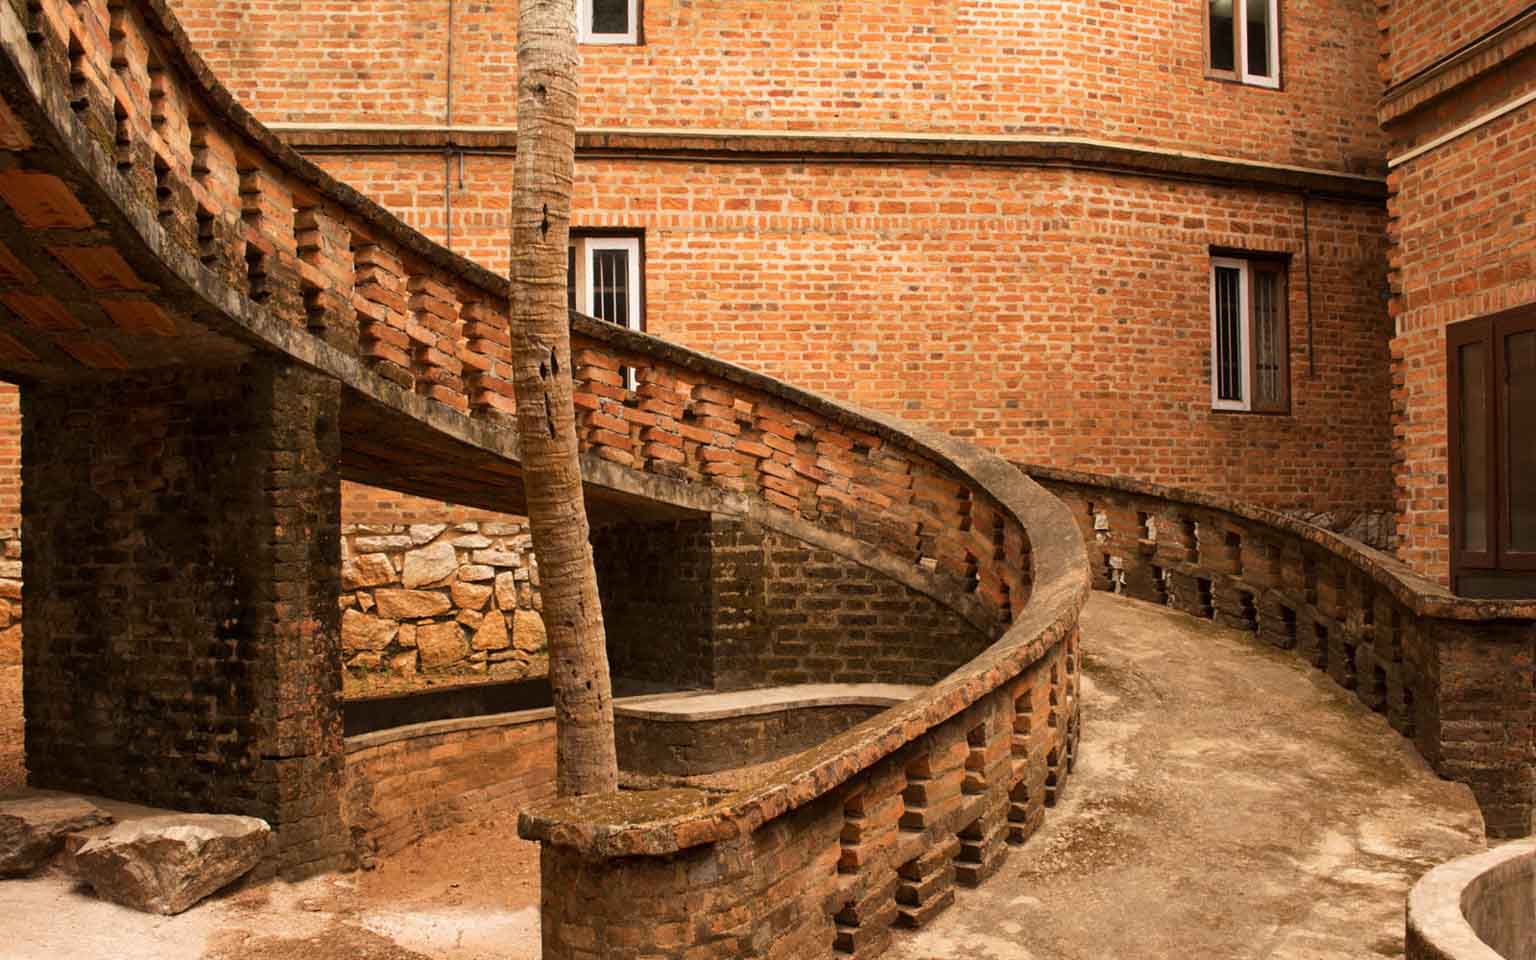 A spiral pathway built using red bricks